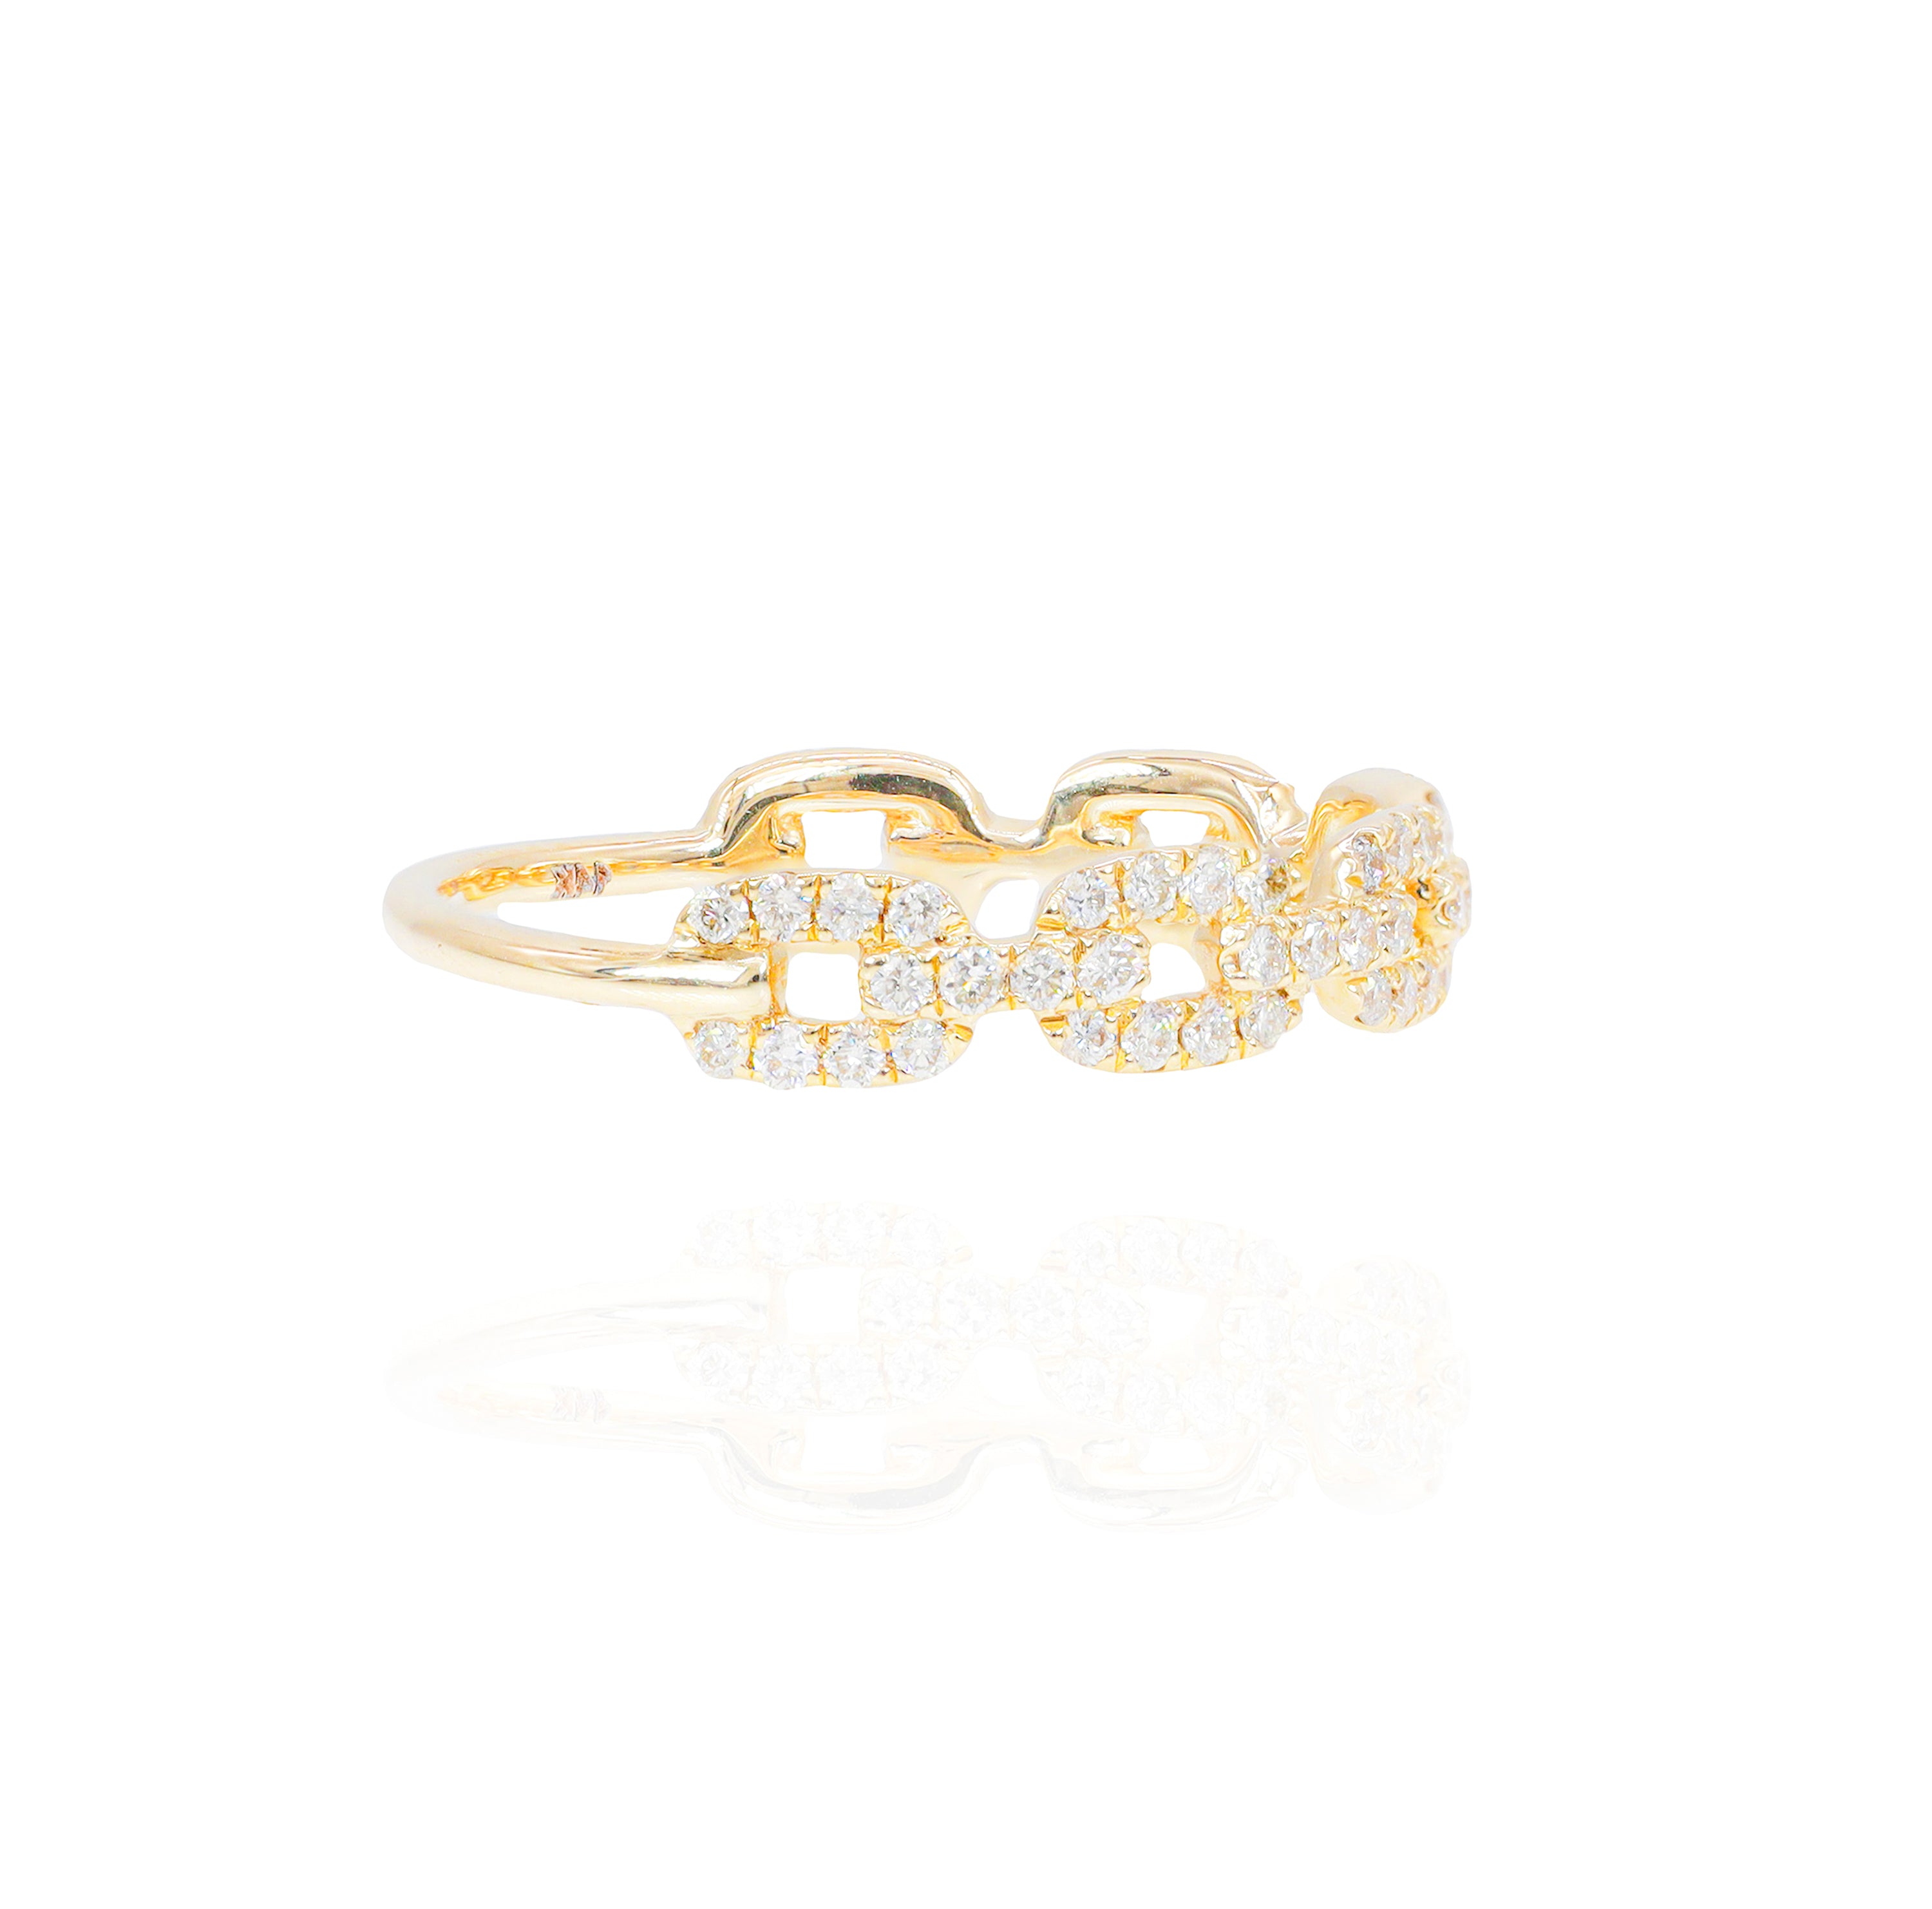 Small Hermes Diamond Ring